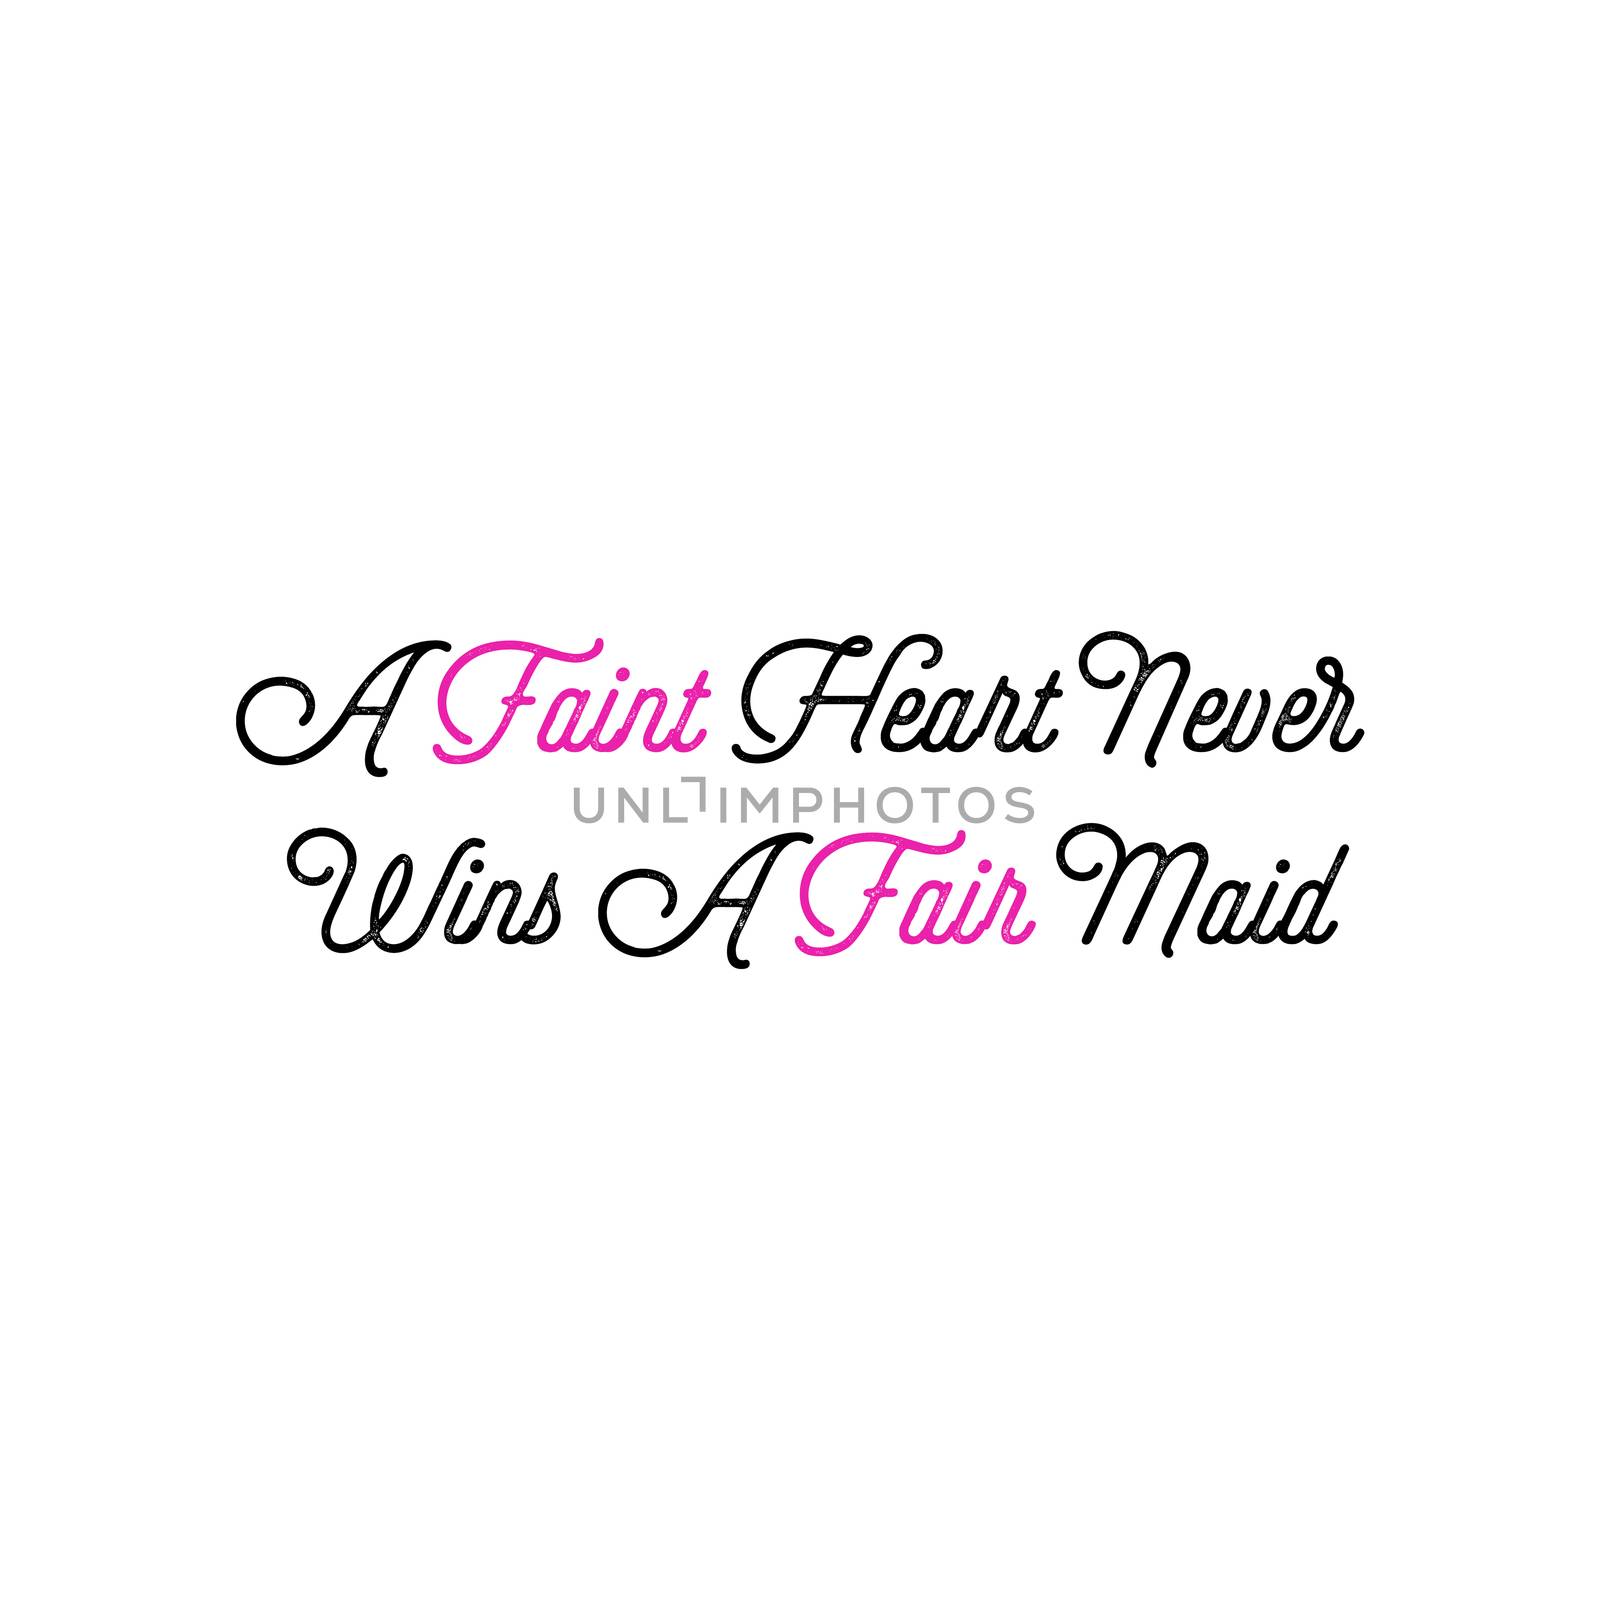 A quote saying "A Faint Heart Never Wins A Fair Maid".